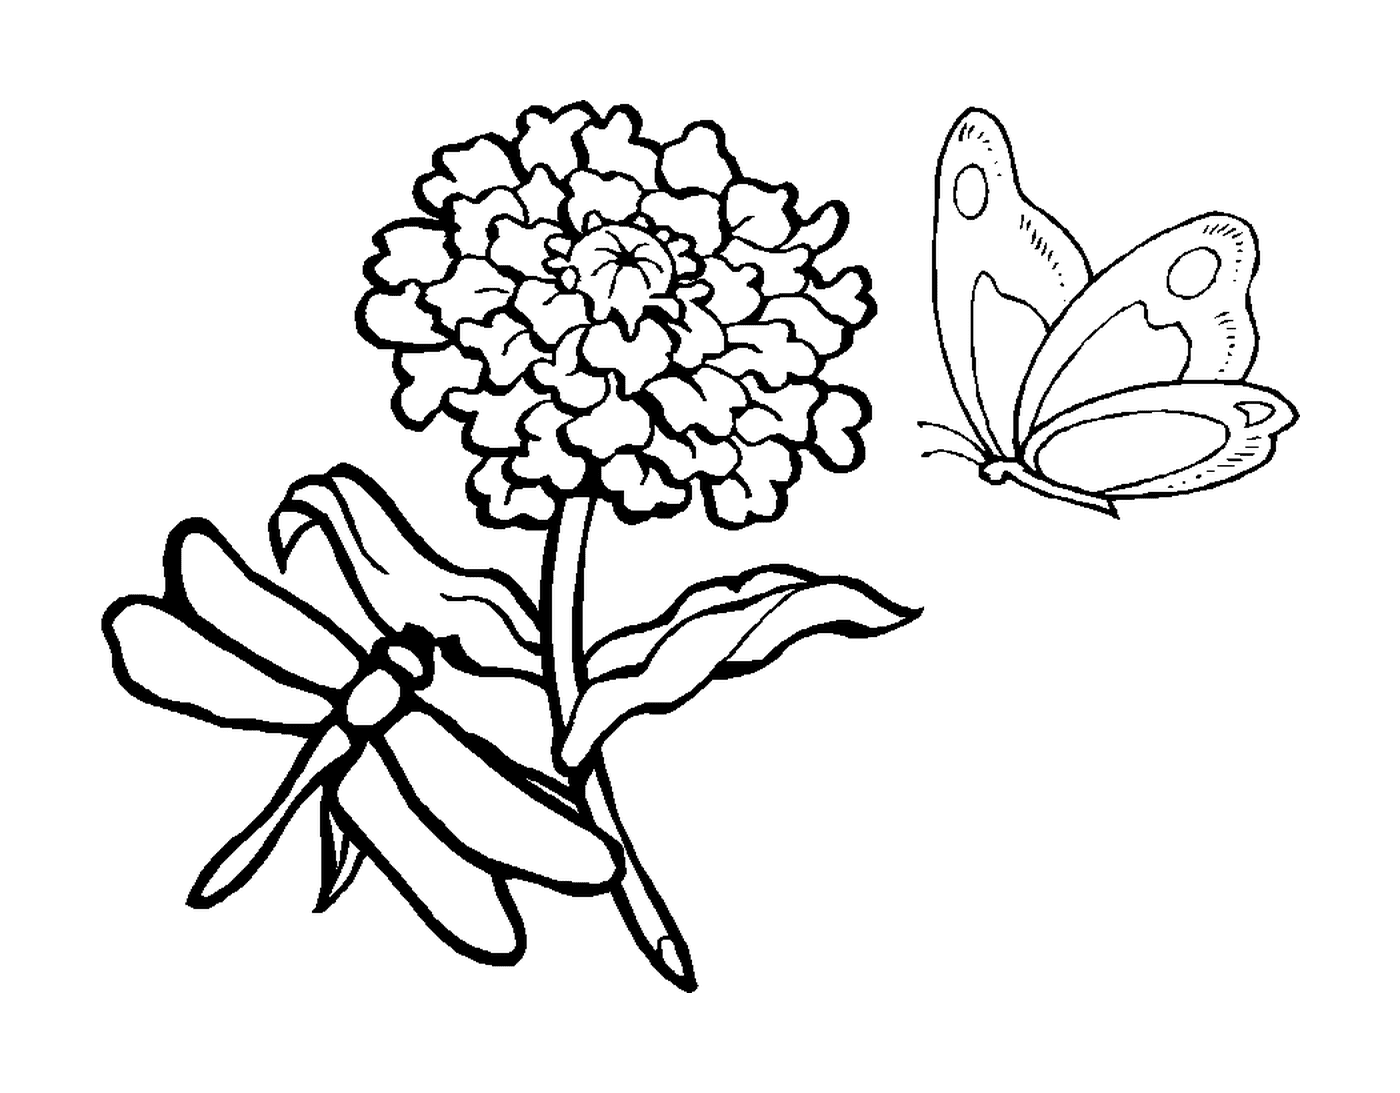  libélula e borboleta perto 